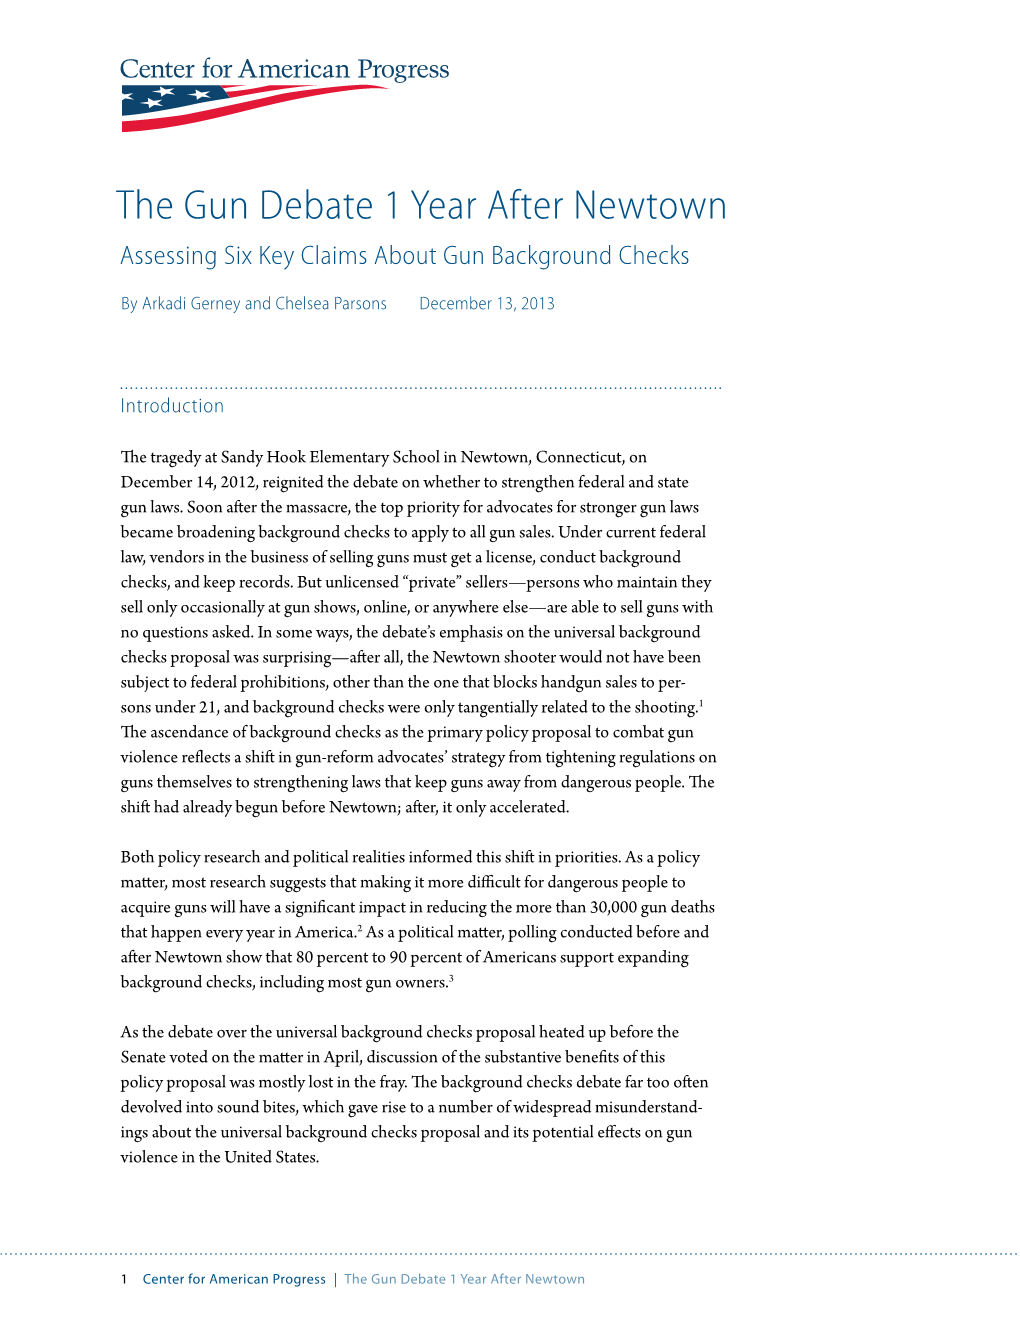 The Gun Debate 1 Year After Newtown Assessing Six Key Claims About Gun Background Checks